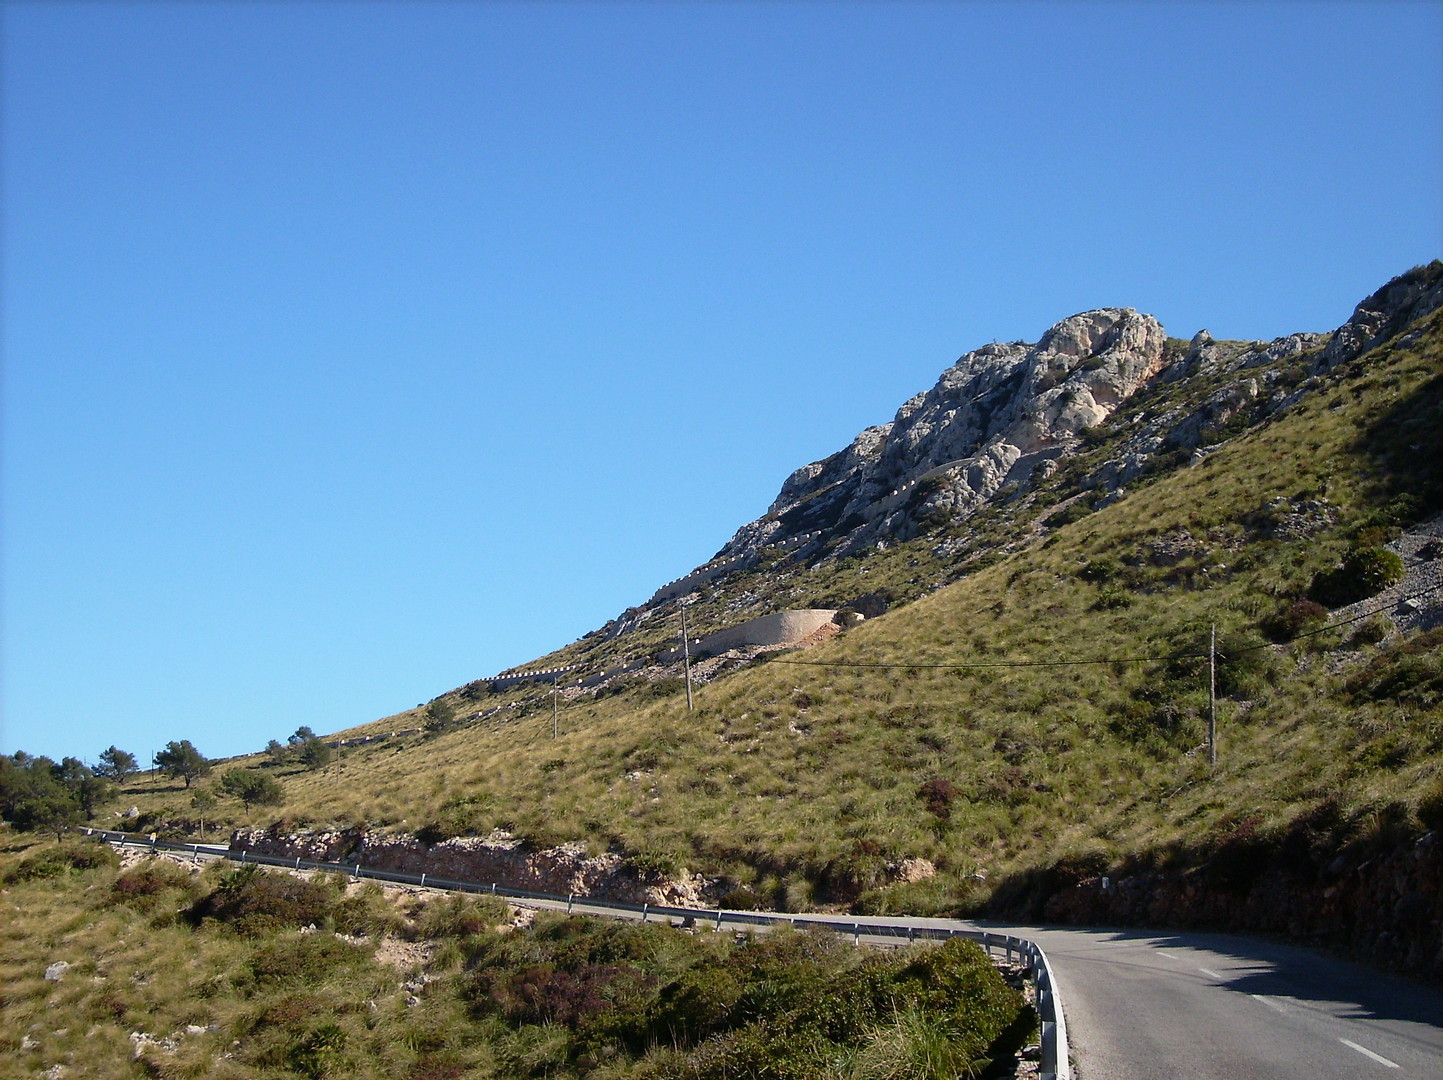 kurz vor dem 1. Plateau, dem Mirador de Mal Pas, mit Blick auf den Anstieg zum alten Wachturm Almallutx.